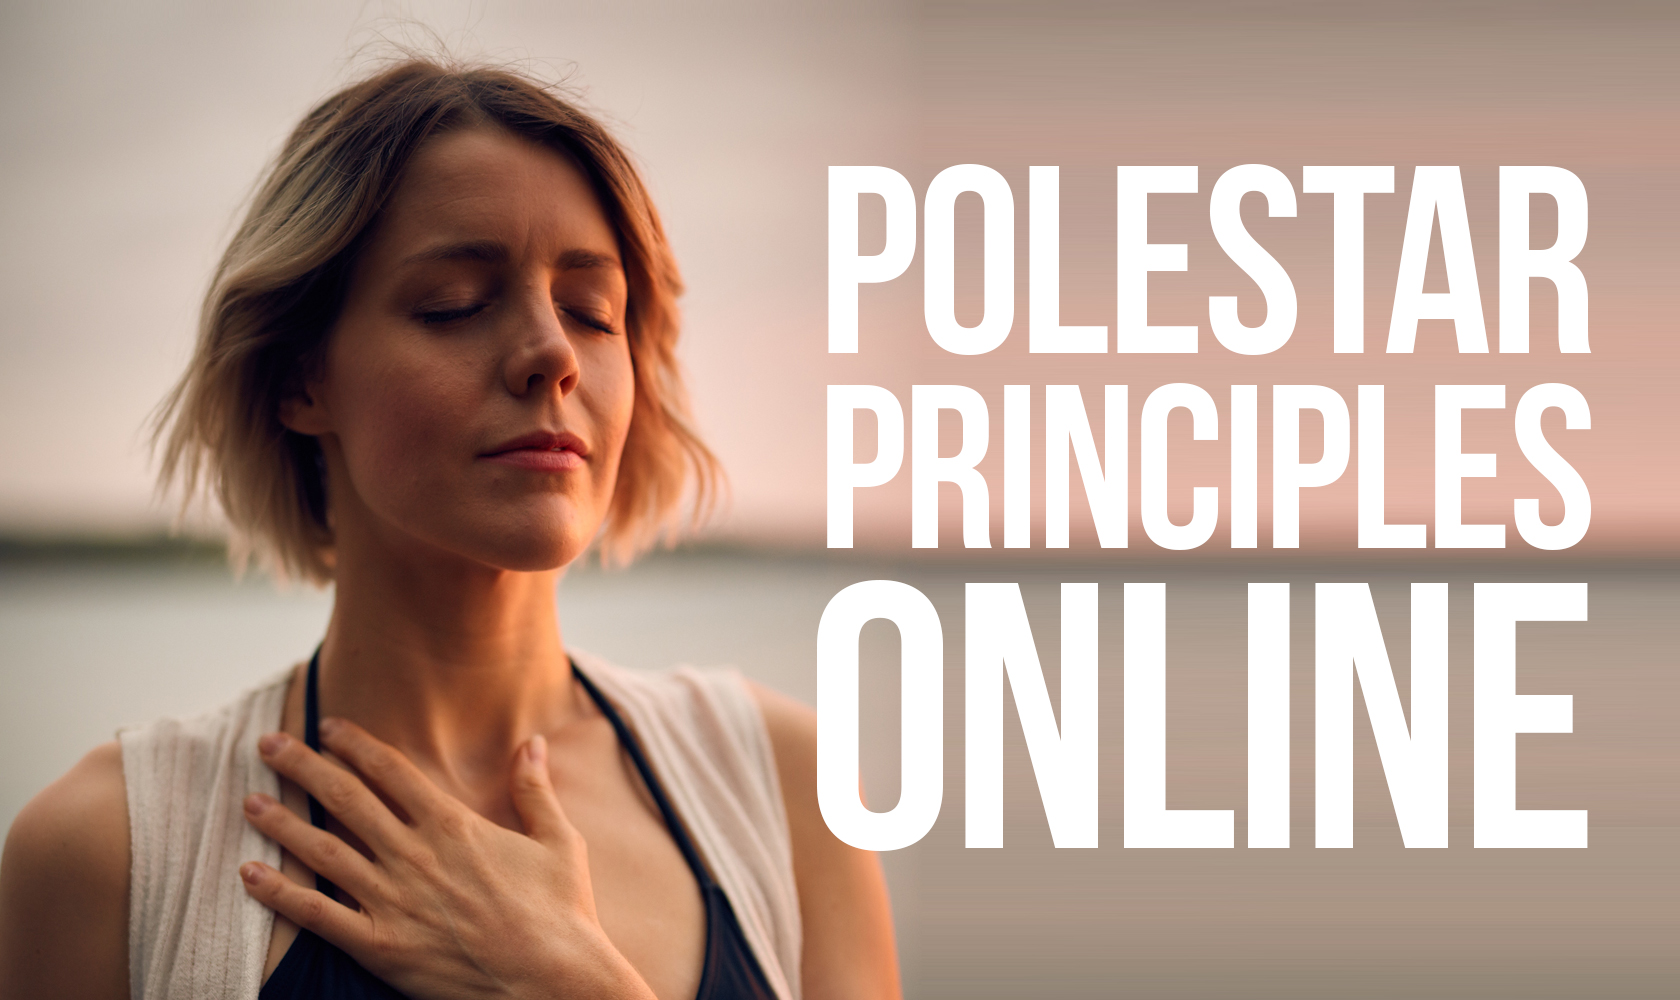 Polestar Principles Online